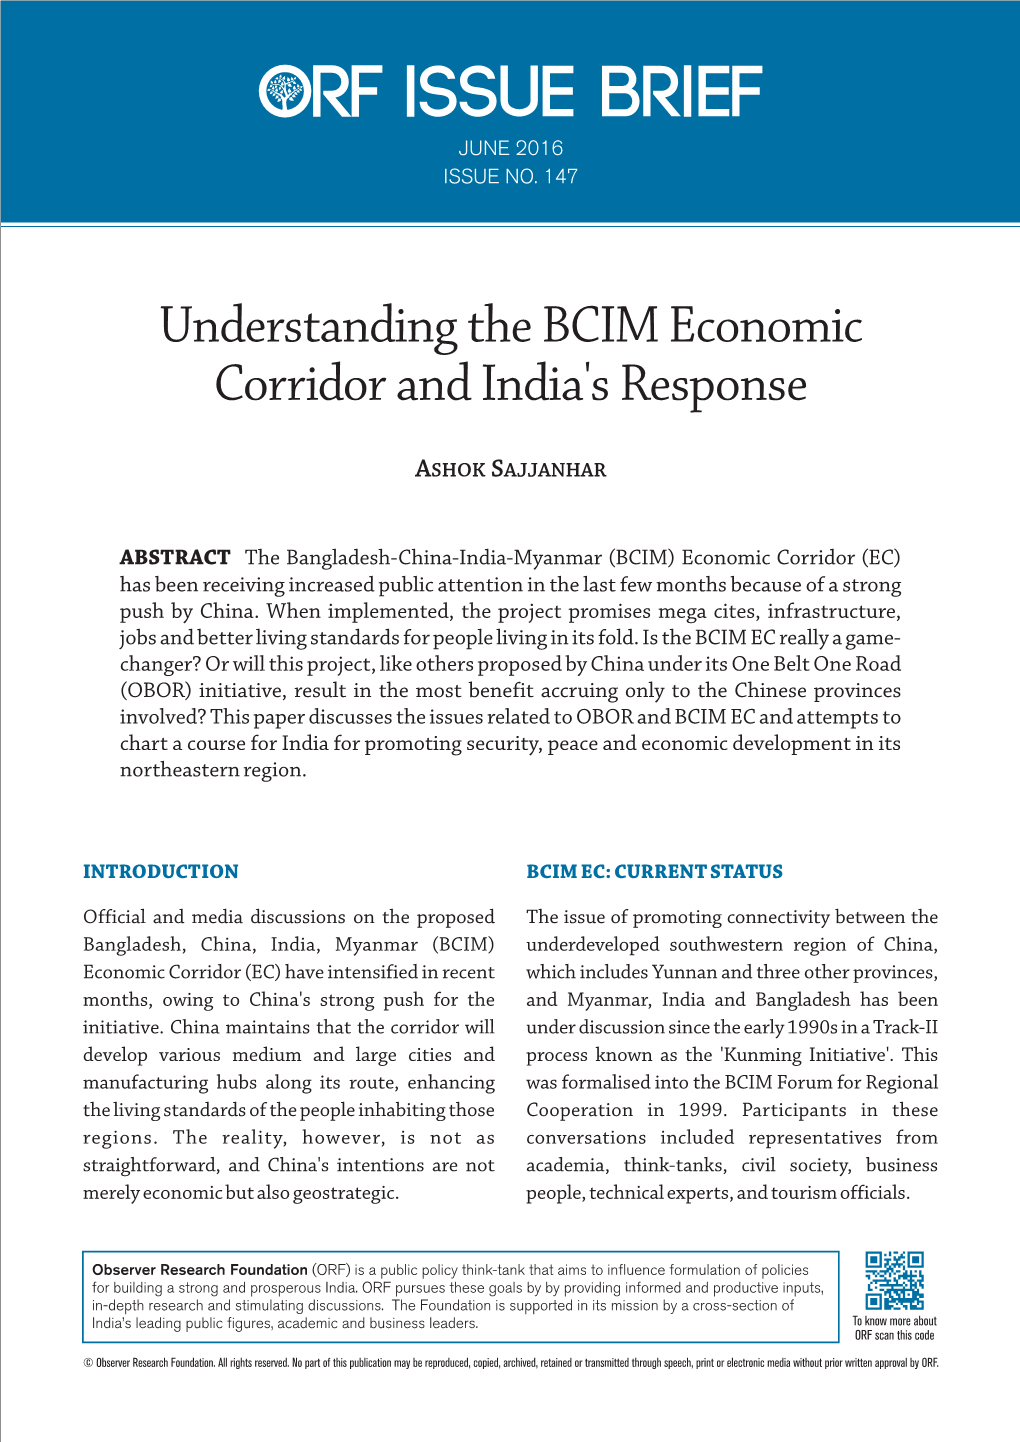 Understanding the BCIM Economic Corridor and India's Response